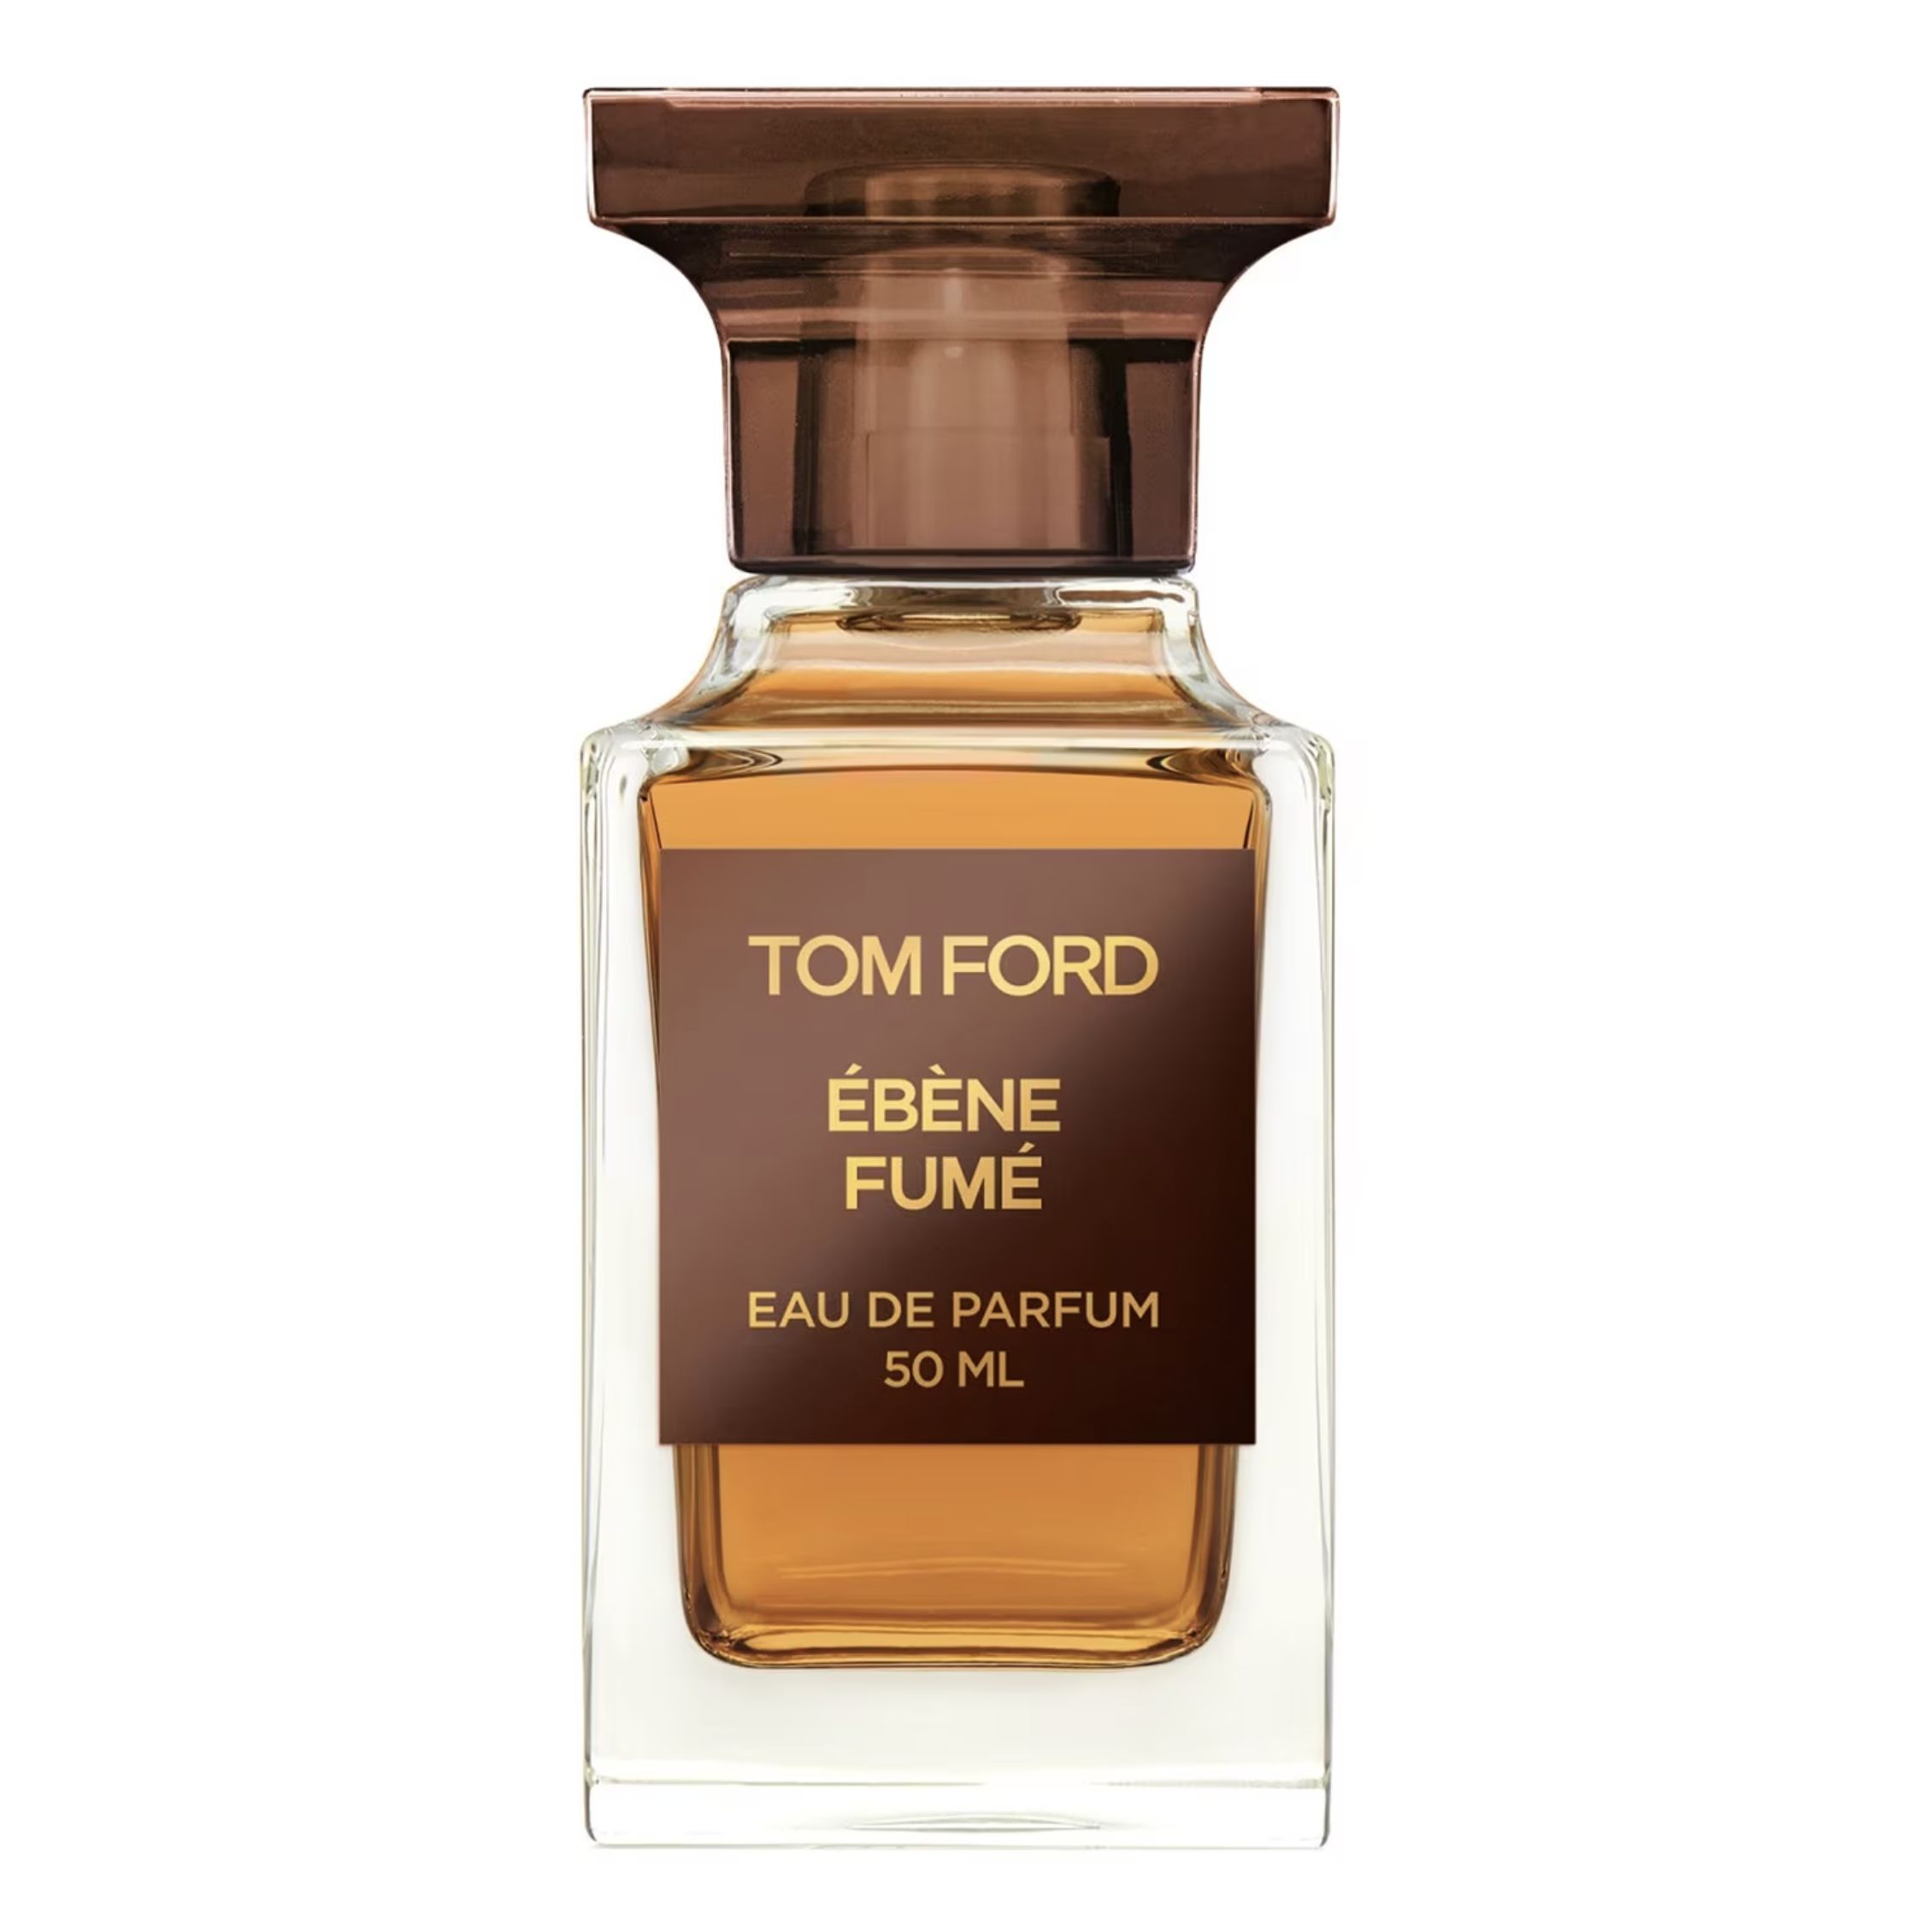 Духи похожие на том форд. Tom Ford ebene fume. Ébène fumé Tom Ford 100 ml. Tom Ford ebene fume 100ml. Tom Ford Santal blush, 50 мл.